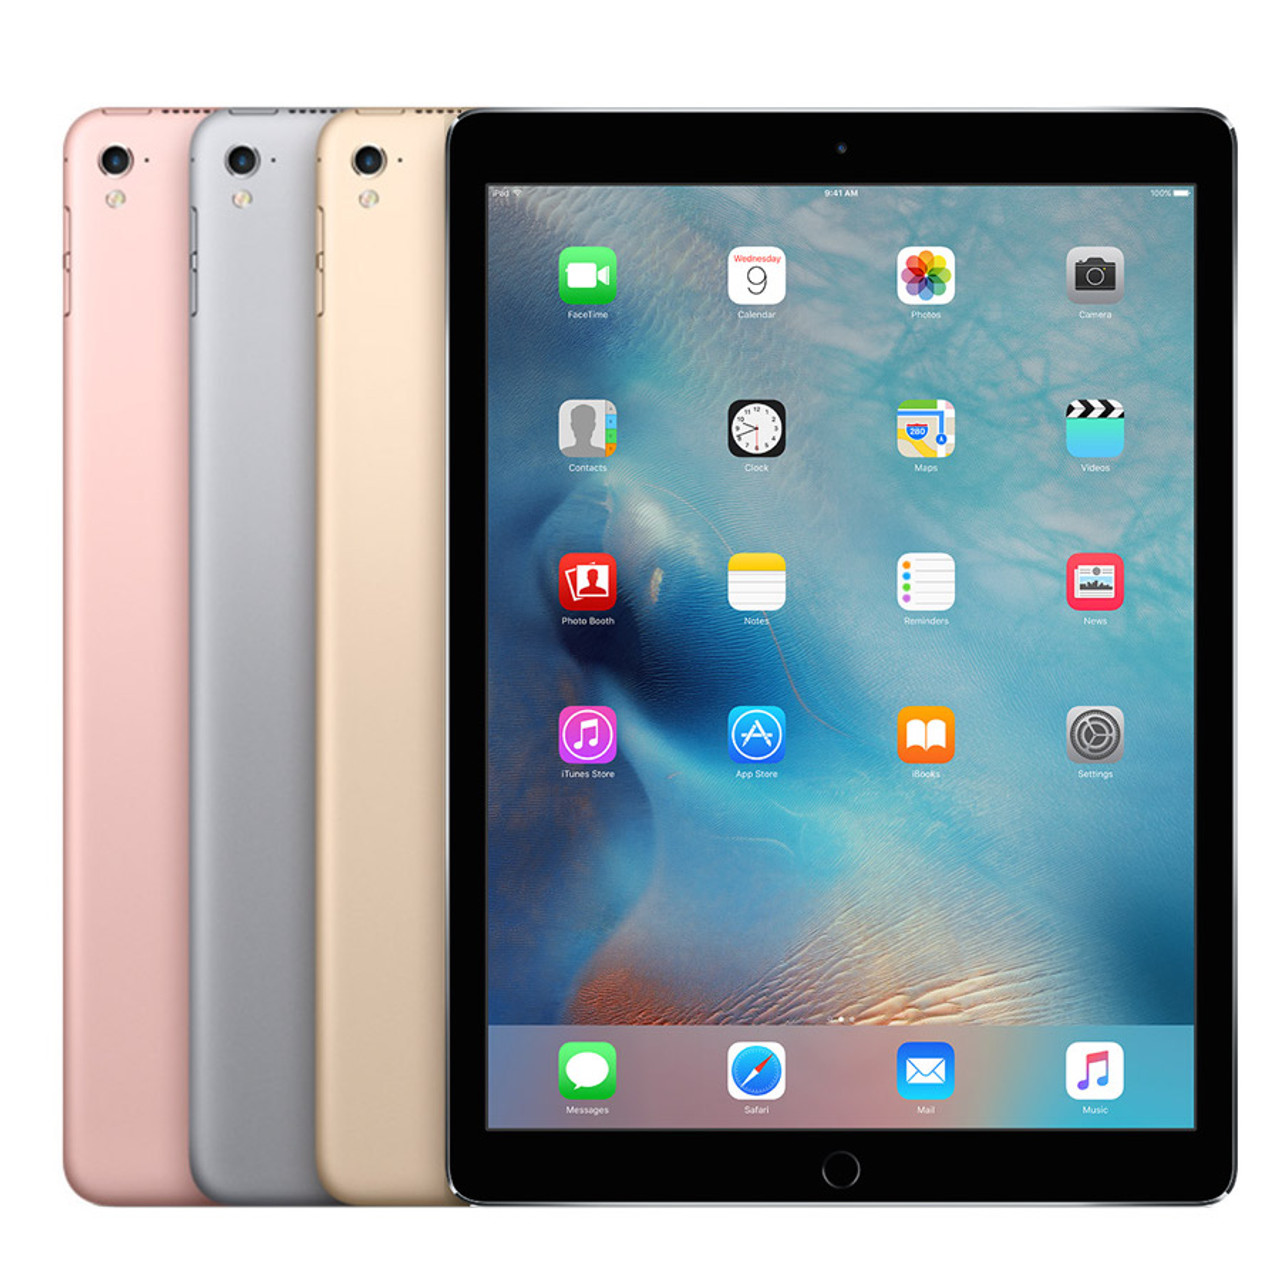 Apple iPad Pro 9.7-inch (256GB) Wi-Fi + Cellular